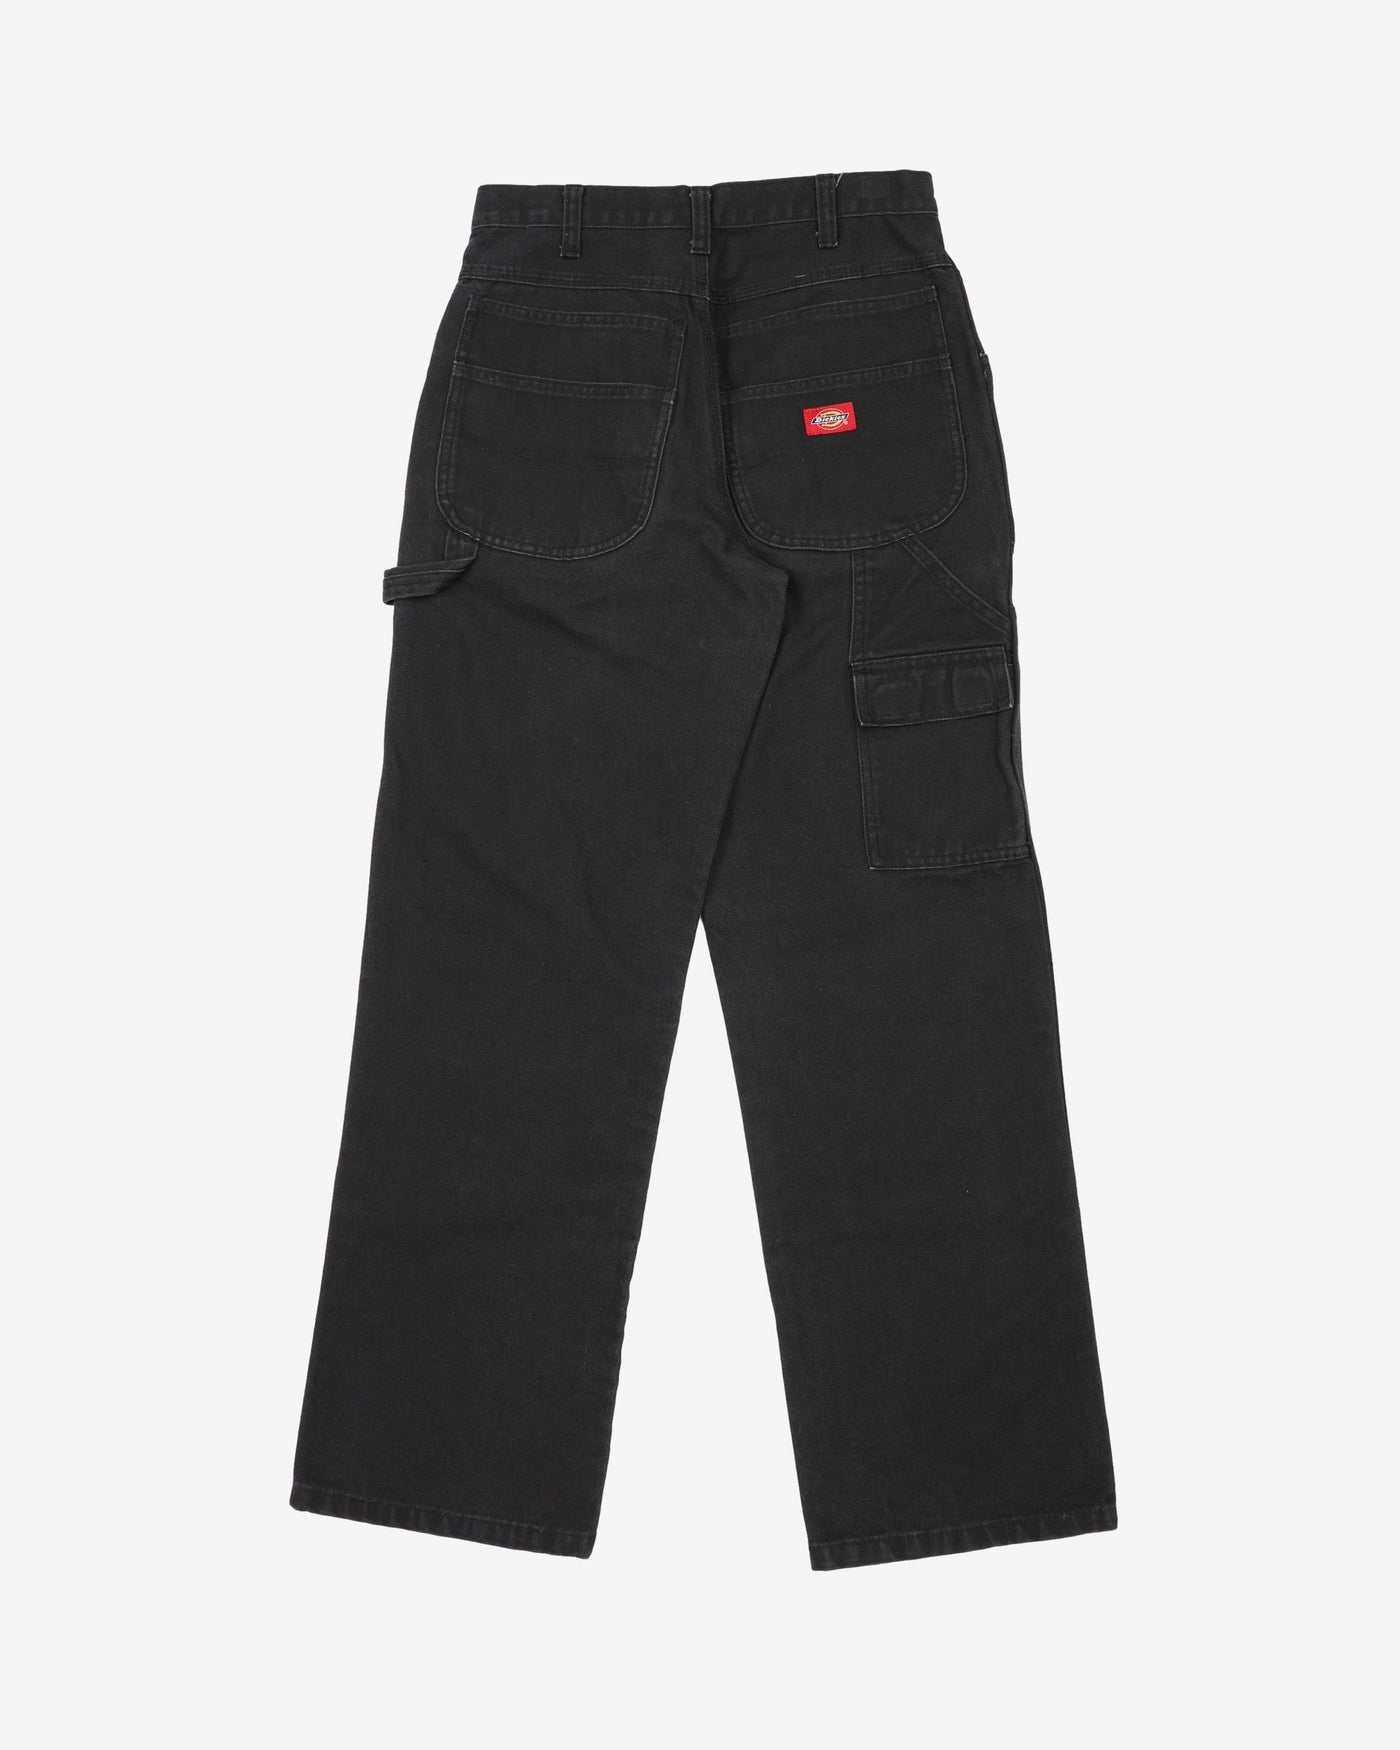 Dickies Black Double Knee Workwear Jeans - W29 L29